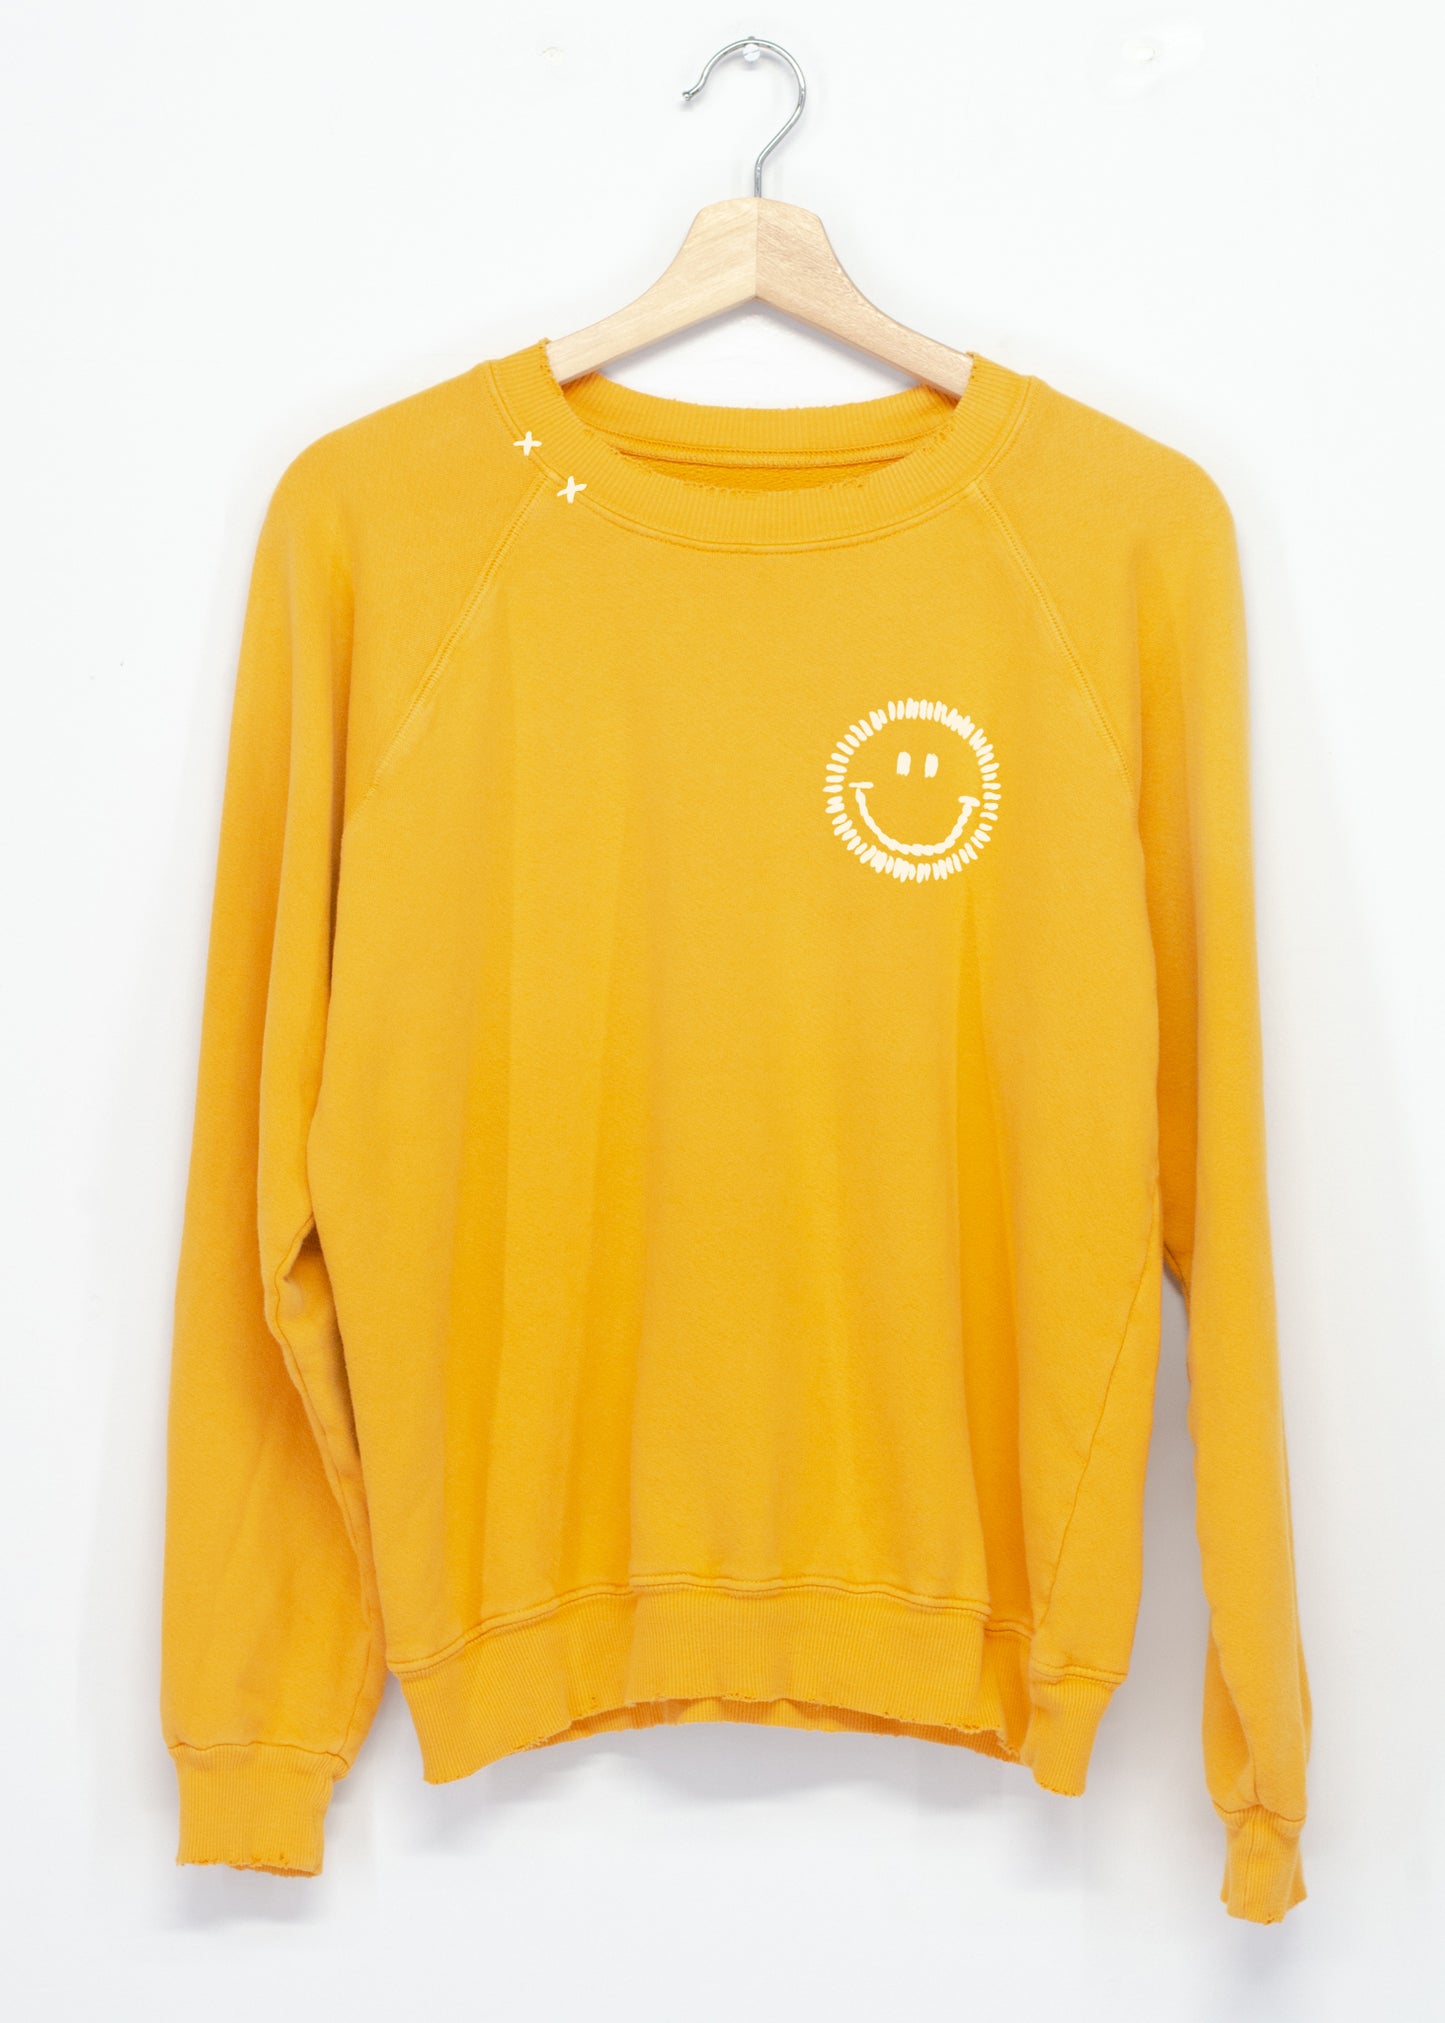 Smiley Face xx Sweatshirts (16Colors)